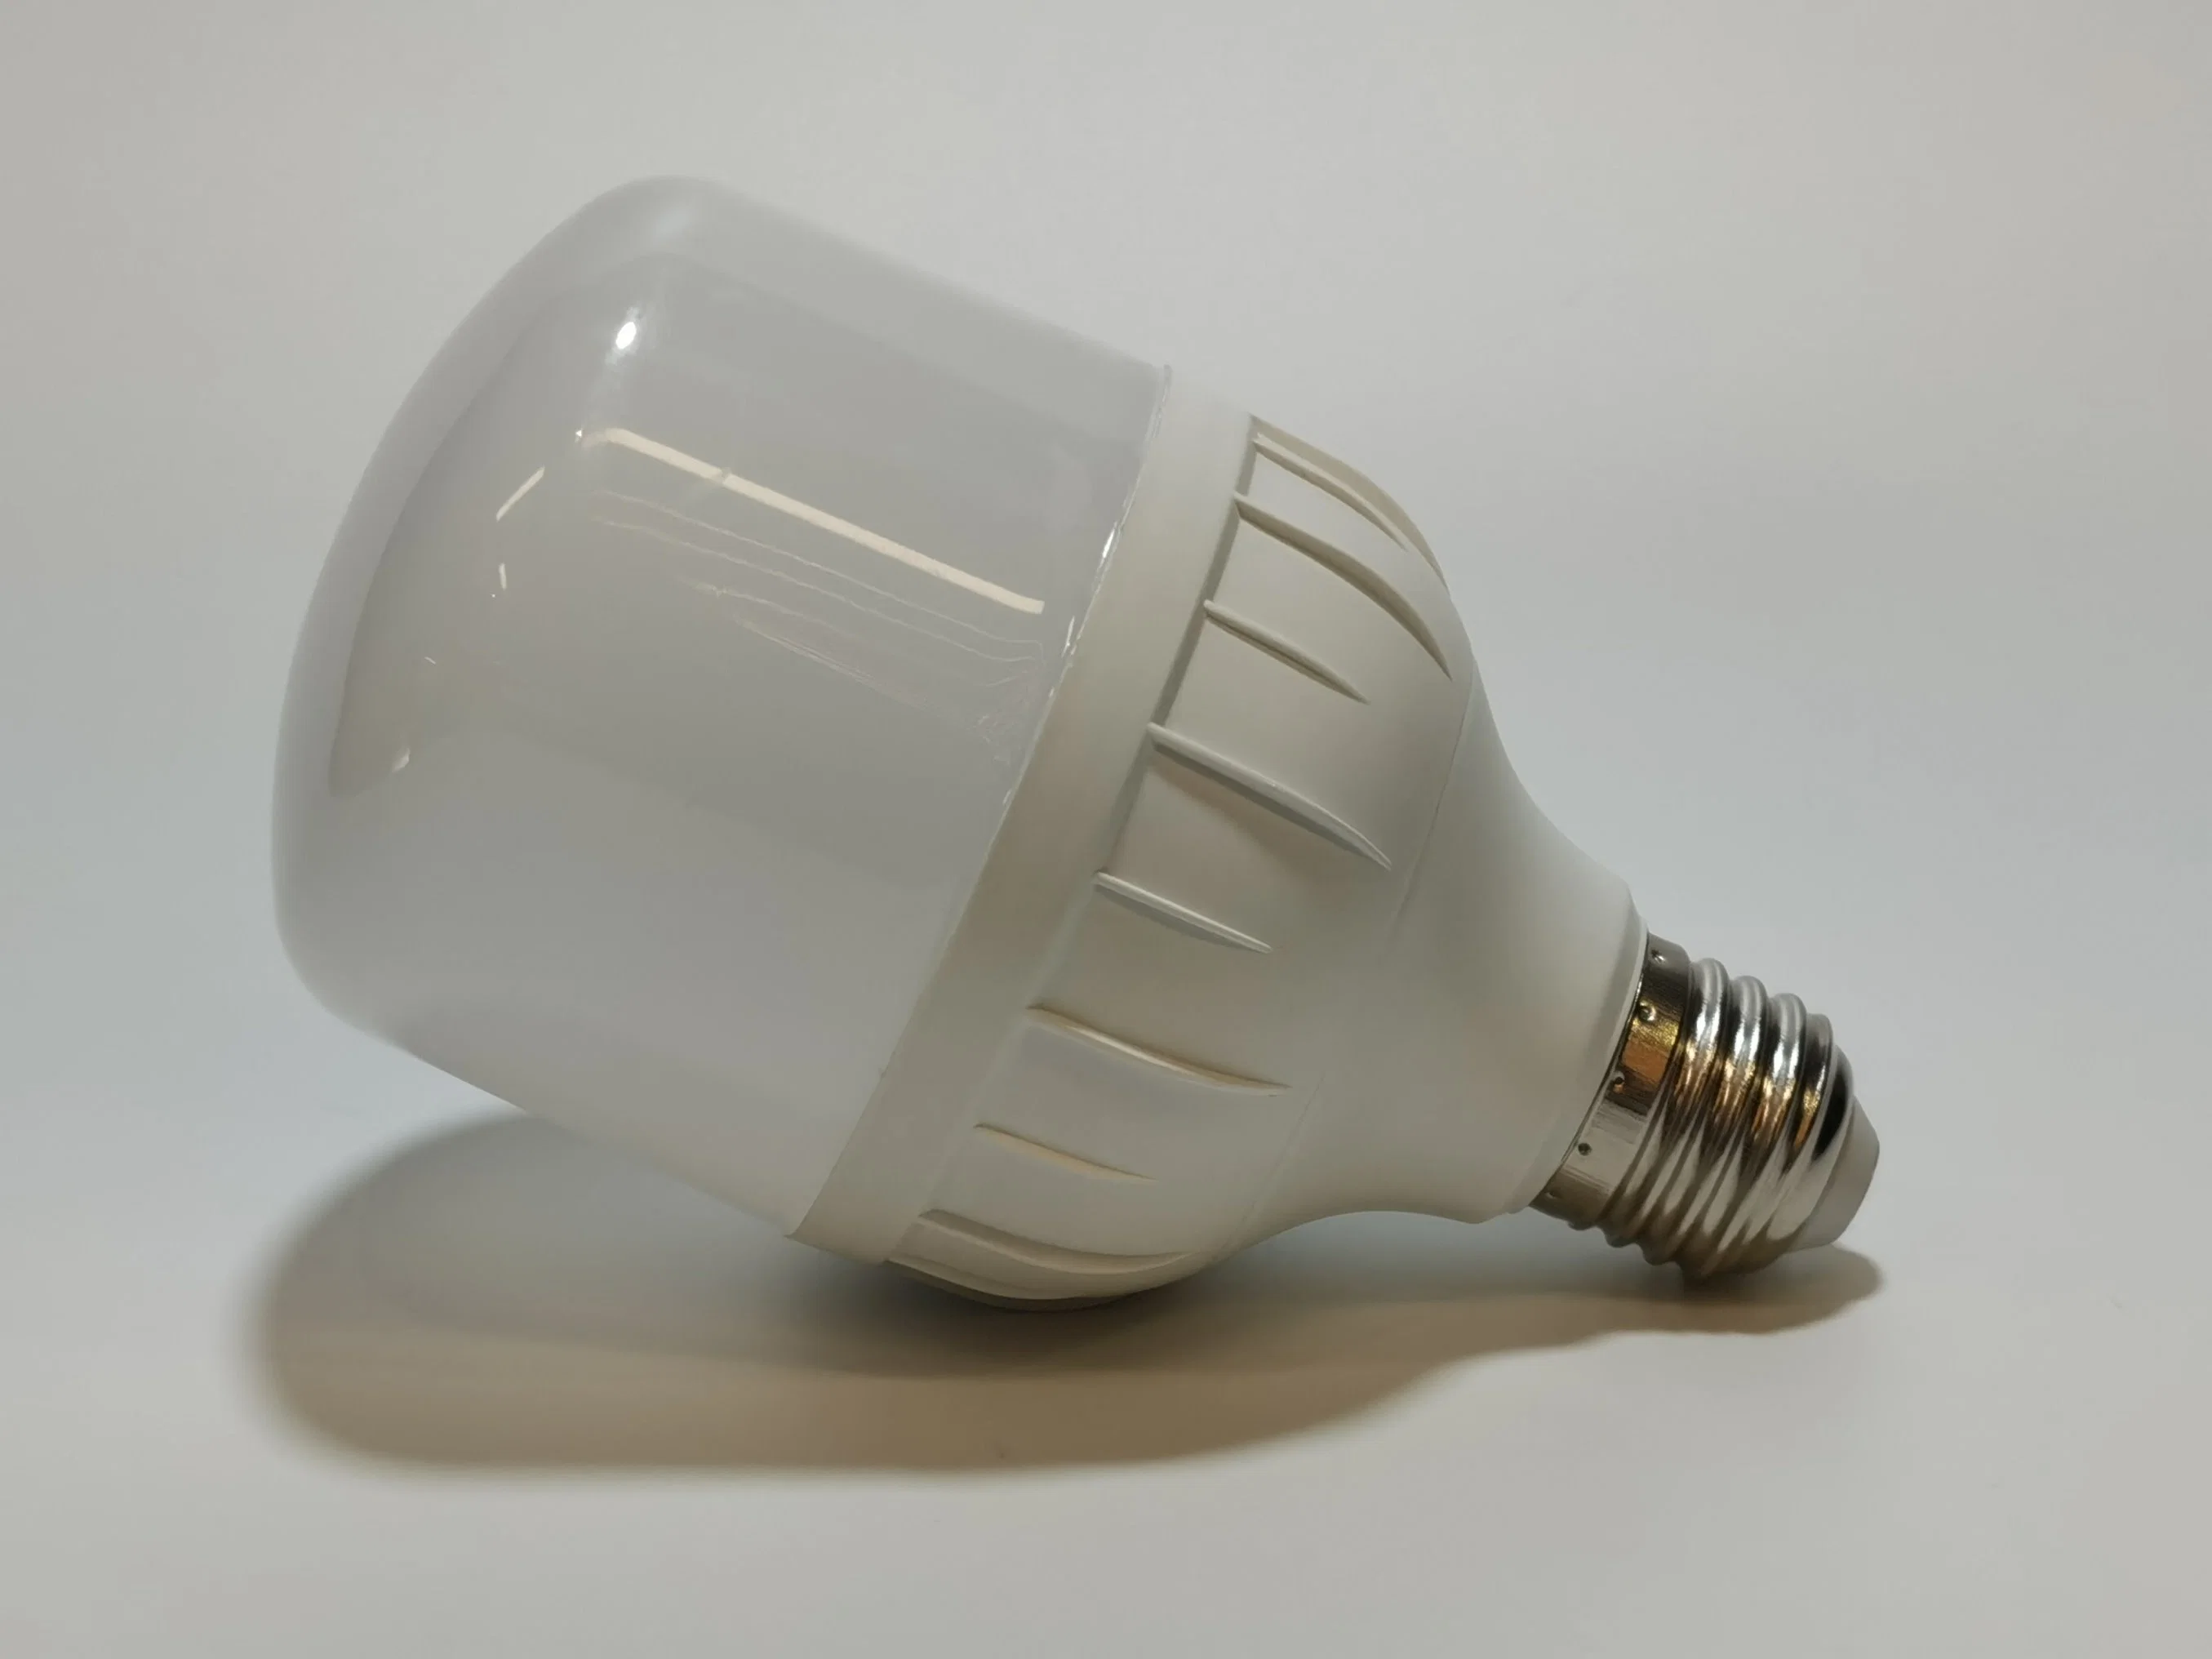 High Quality 5W 10W 15W 20W LED Bulb Light Energy Saving Lamp Bulb